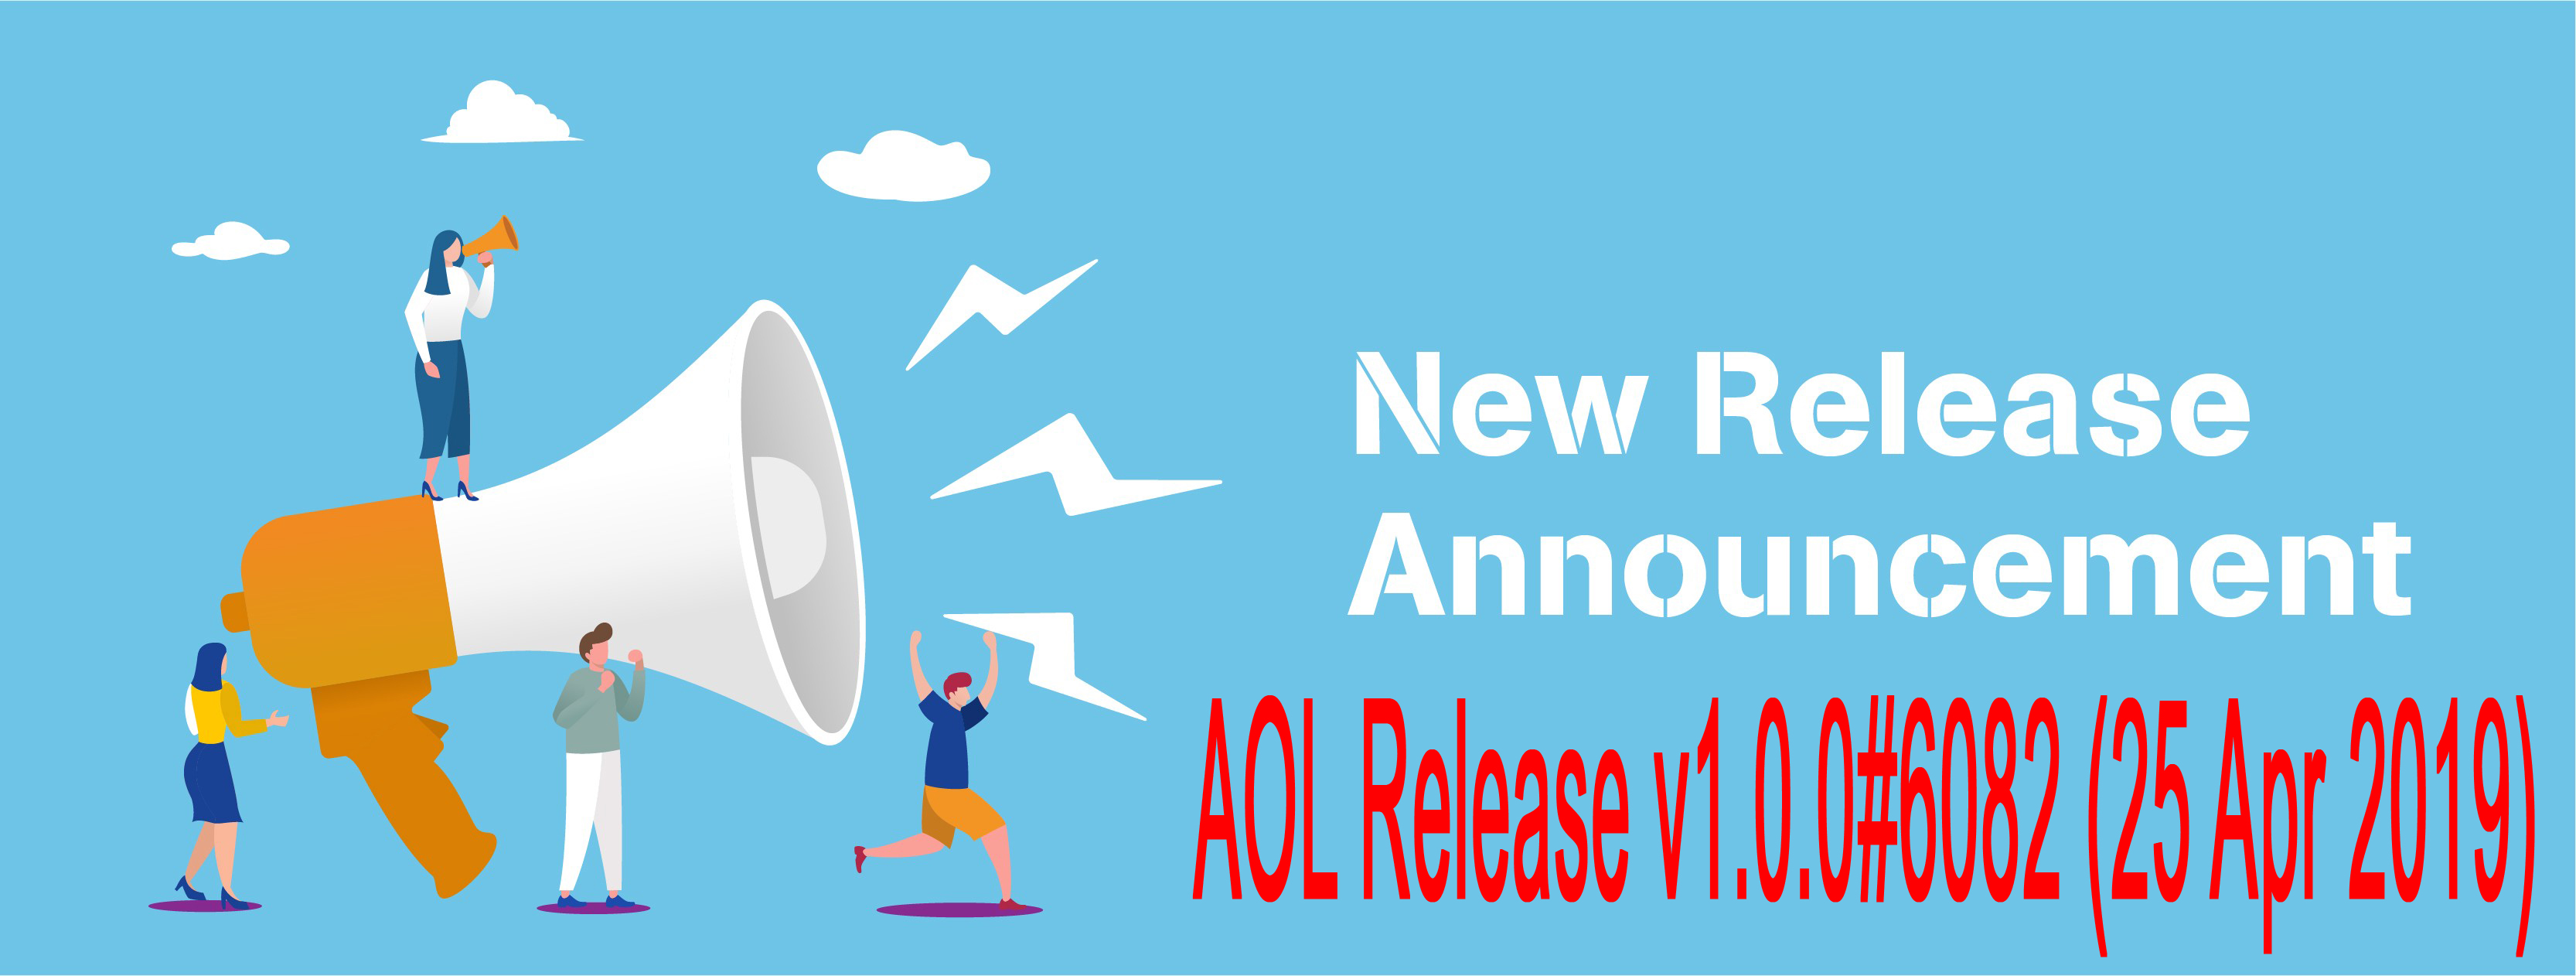 Release v1.0.0#6082 (25 Apr 2019)